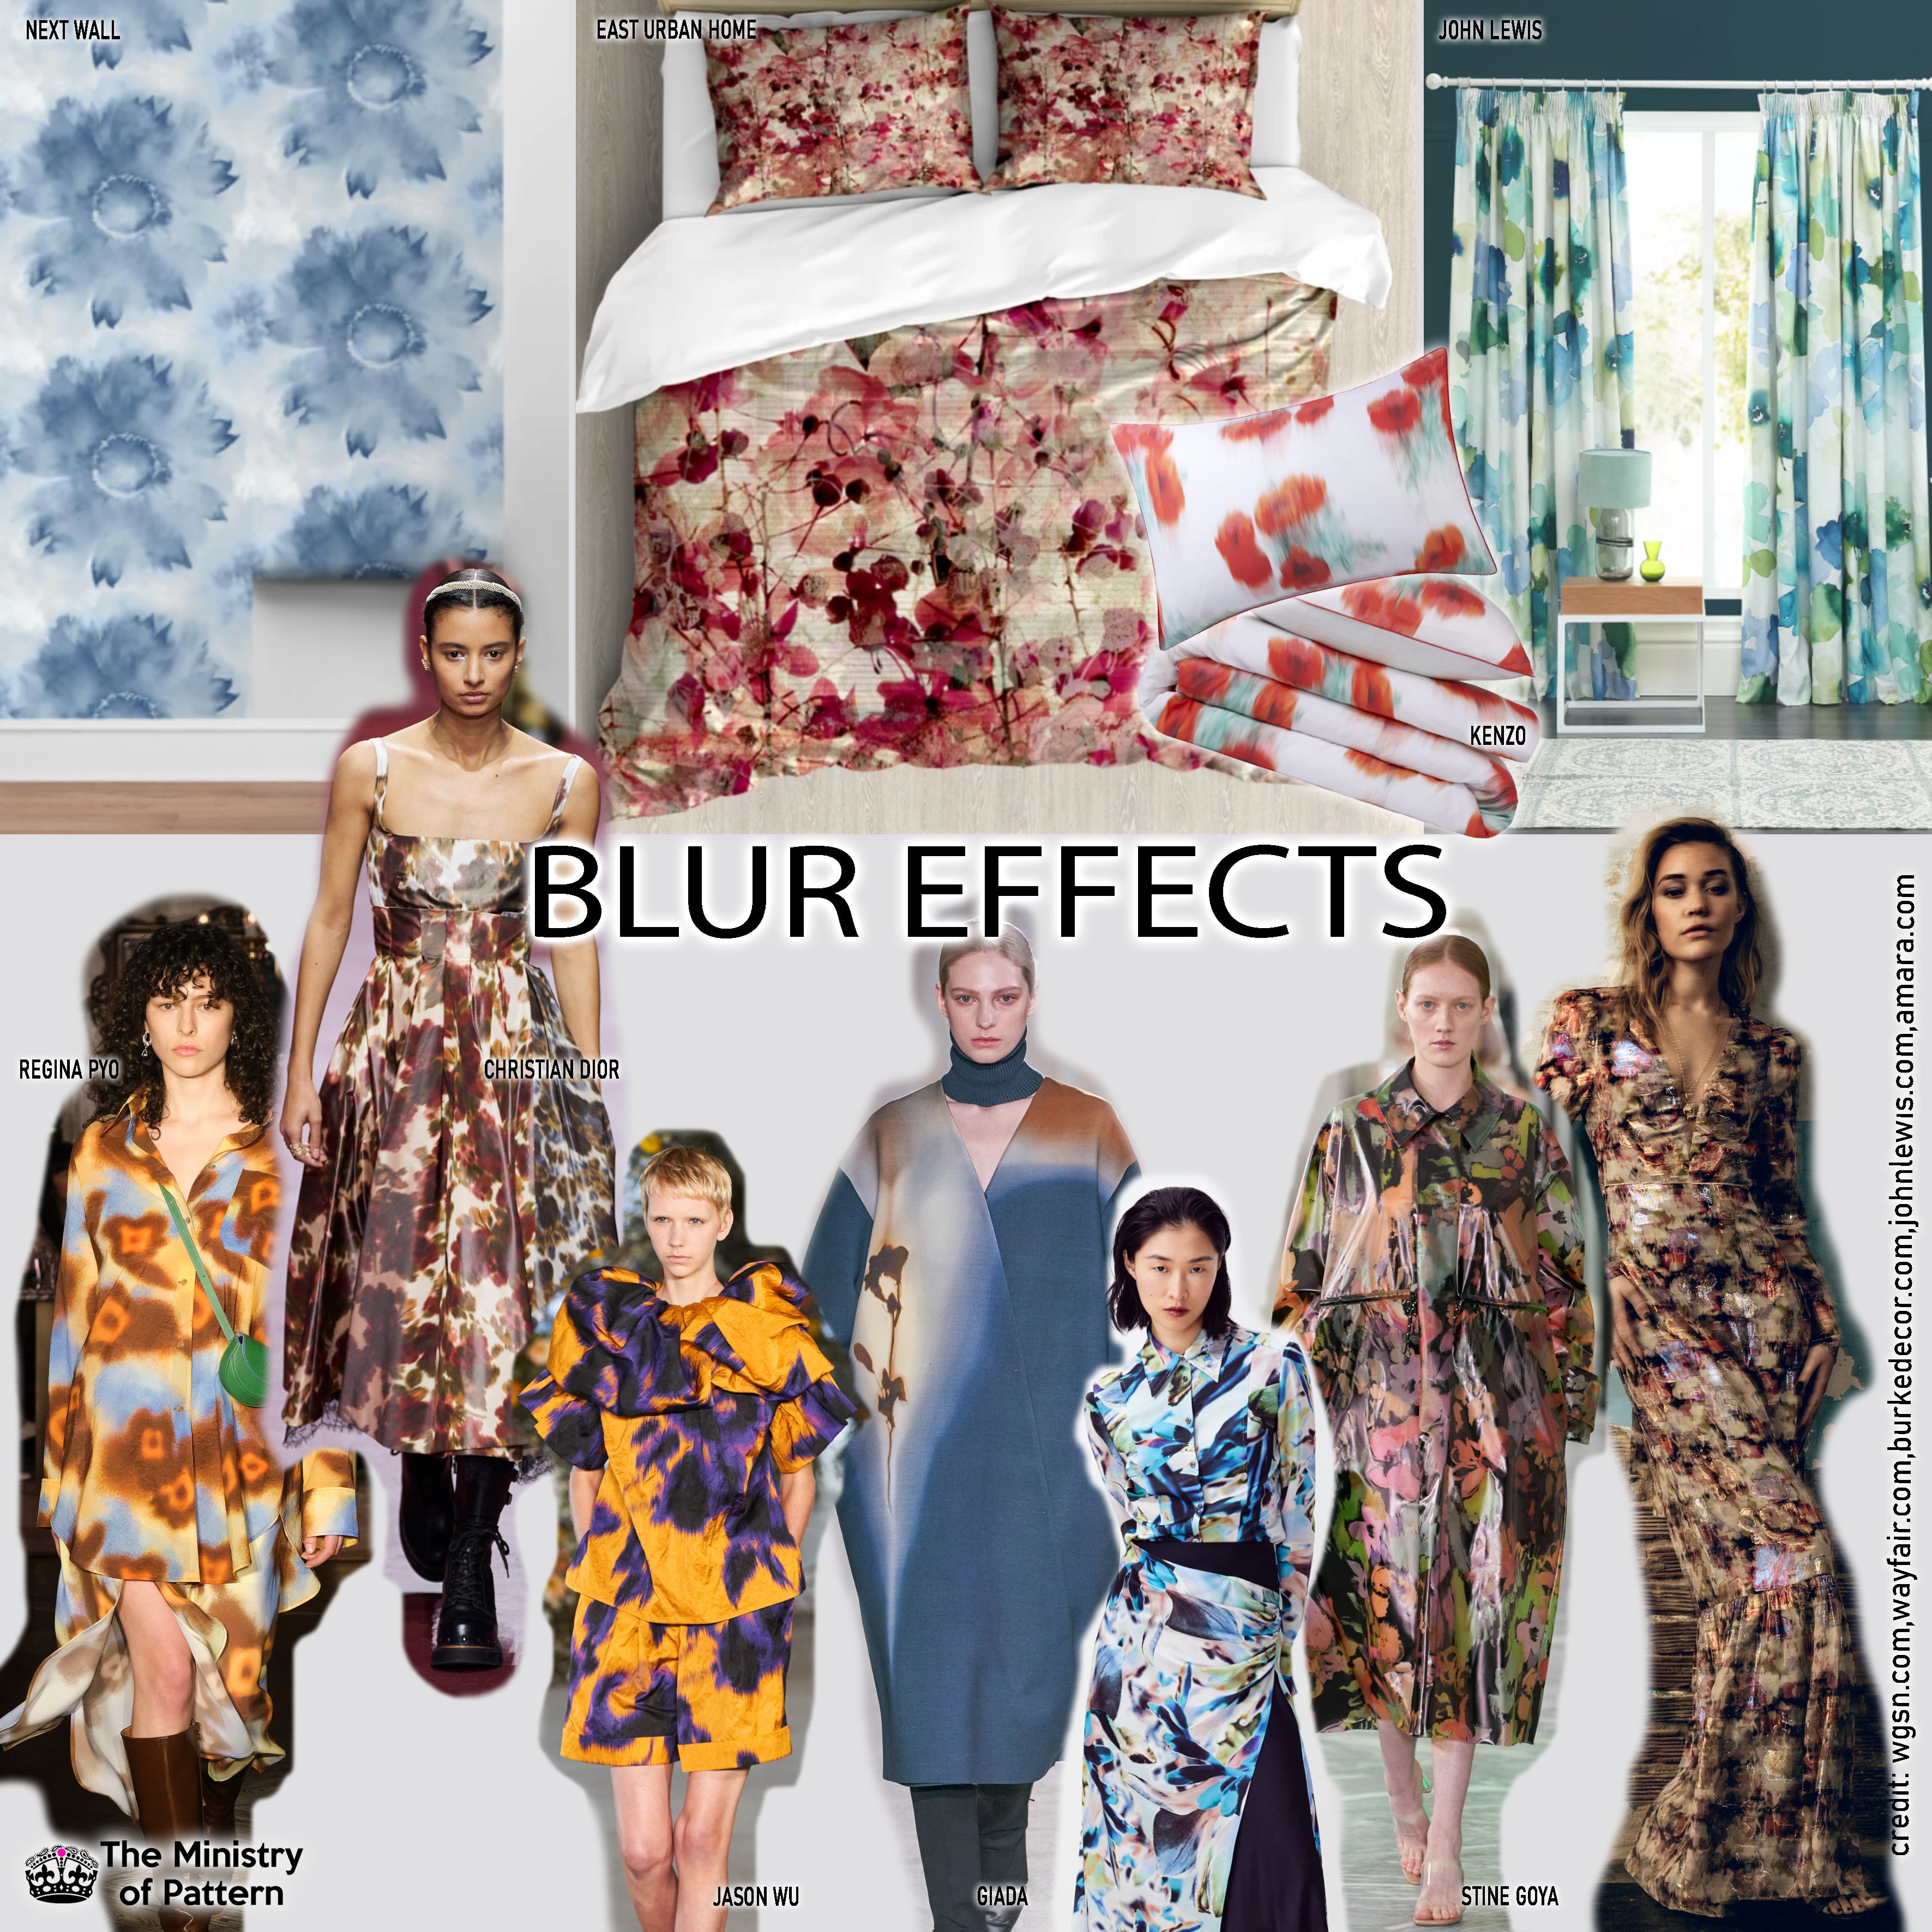 Blur Effects